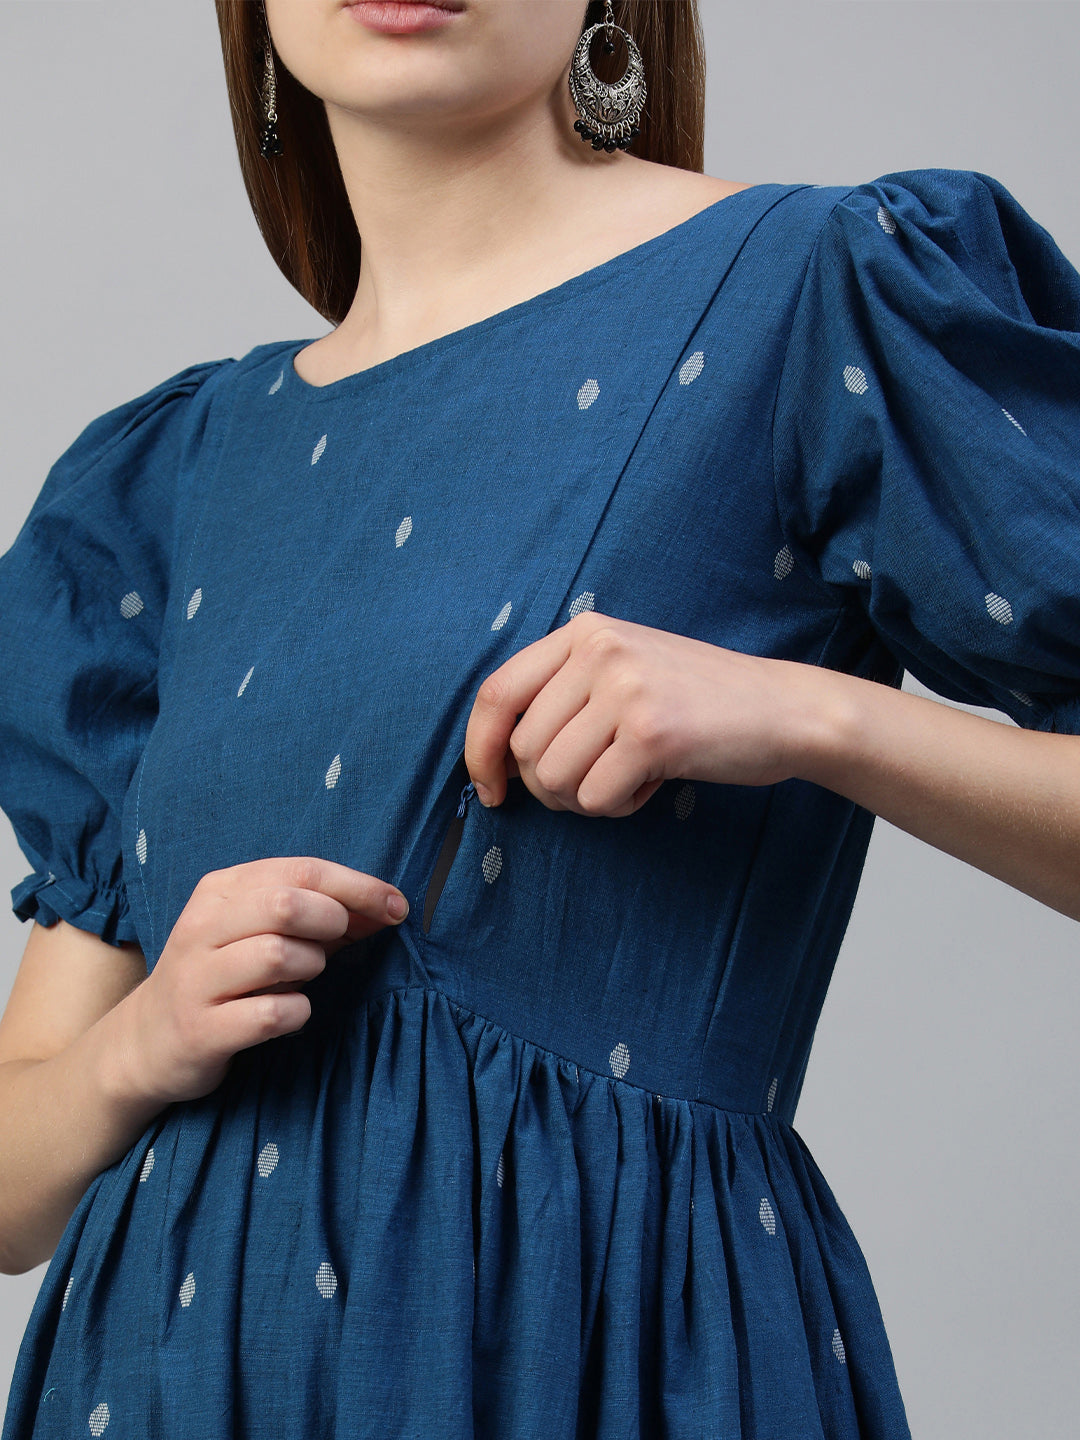 Blue Print Puff Sleeve Maternity Fit & Flare Cotton Maxi Dress